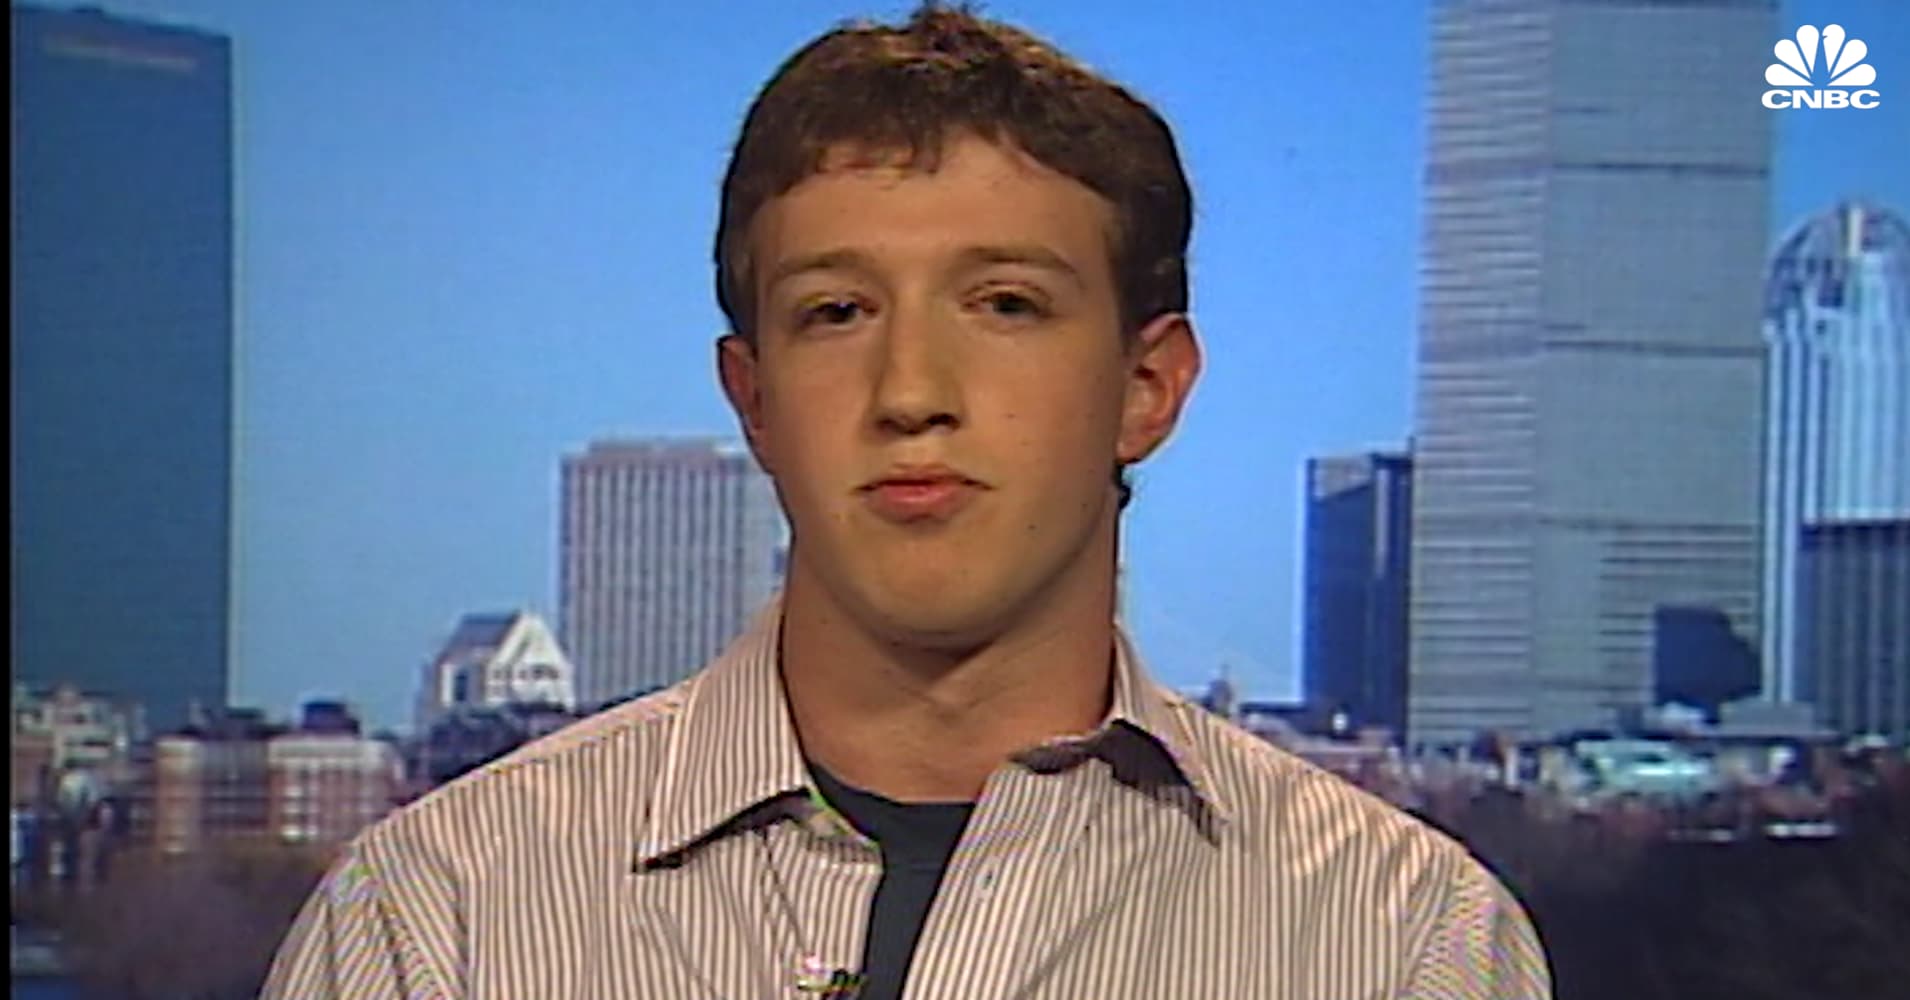 Facebook founder Mark Zuckerberg's first TV interview in 2004 on CNBC